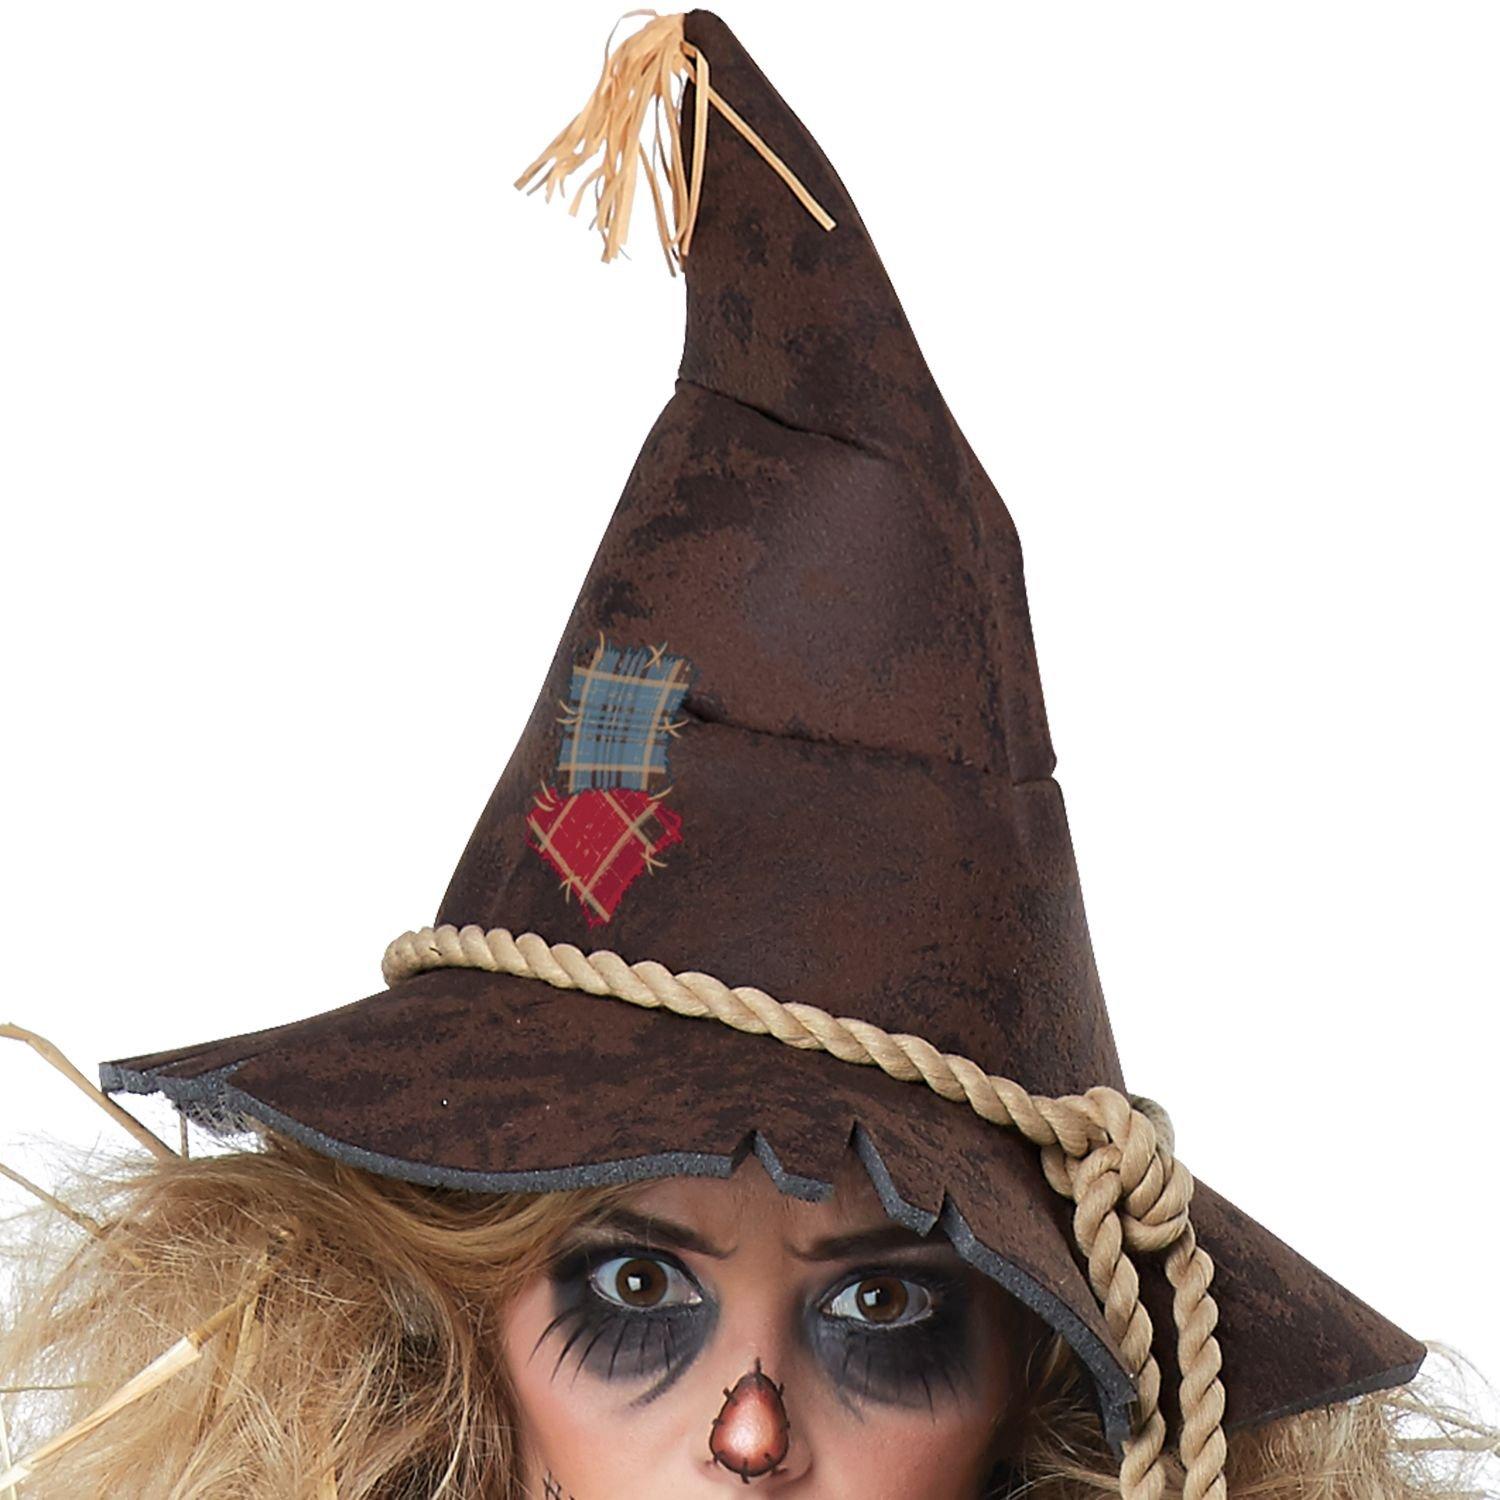 scary scarecrow costume